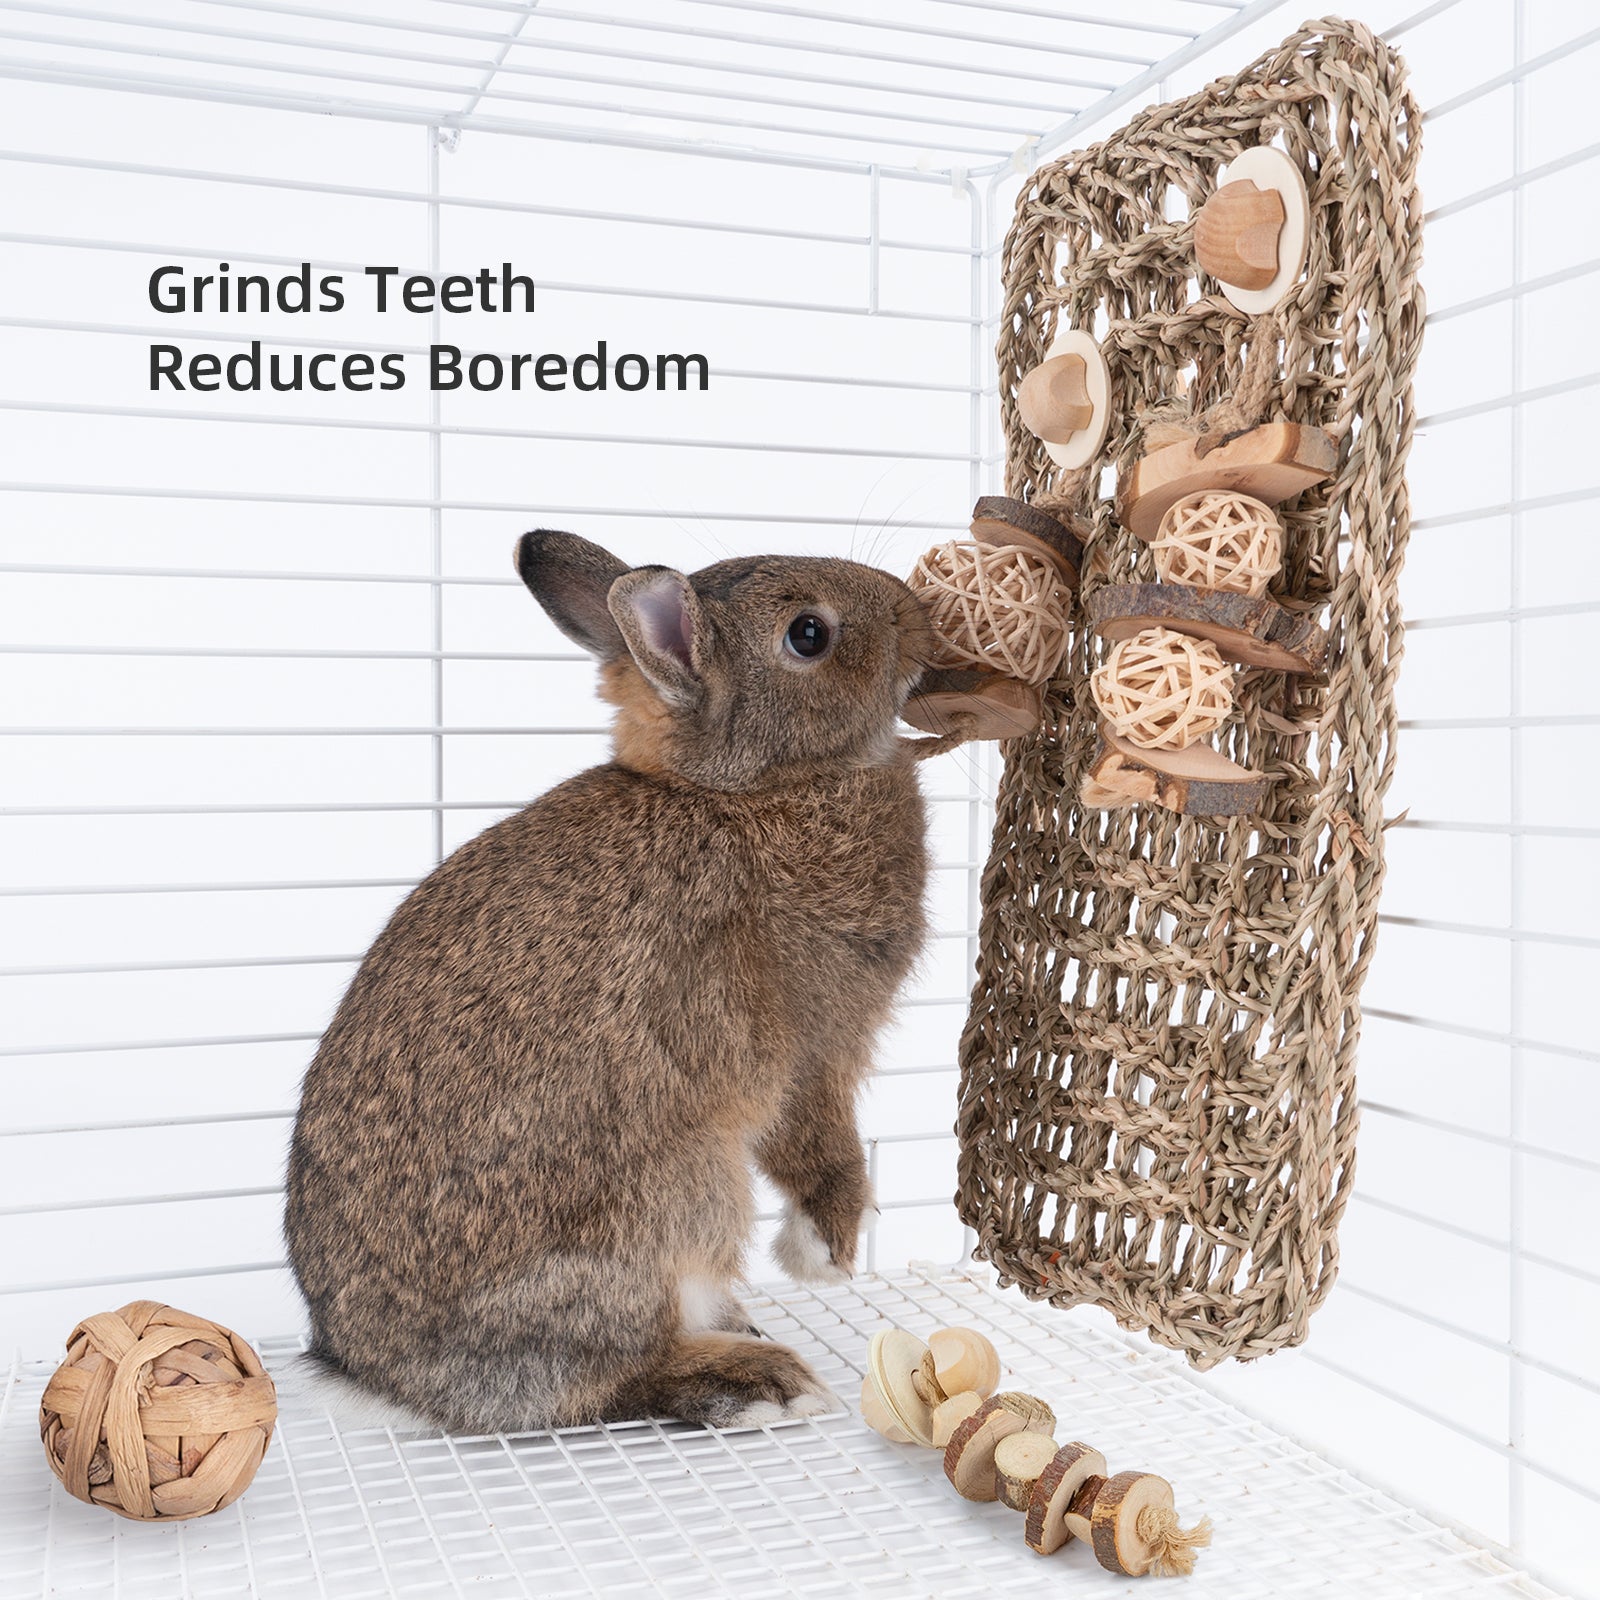 Niteangel艾特 兔子龍貓荷蘭豬籠內防護草墊蘋果木安全啃咬玩具